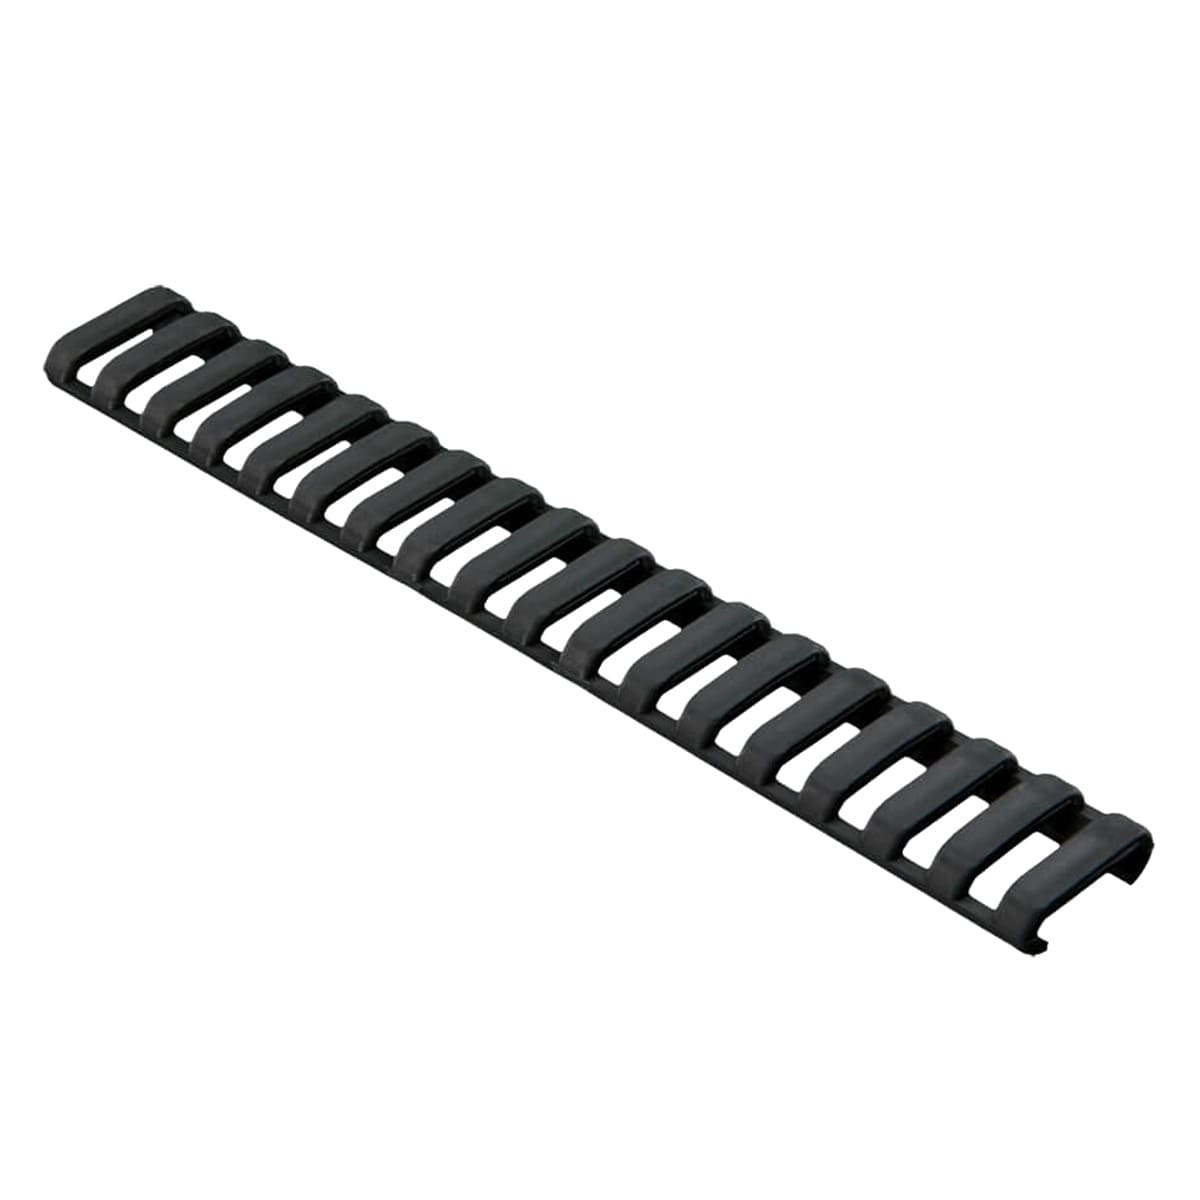 Рейкова панель Magpul Ladder RIS - чорна - Magpul Ladder RIS Rail Panel - Black